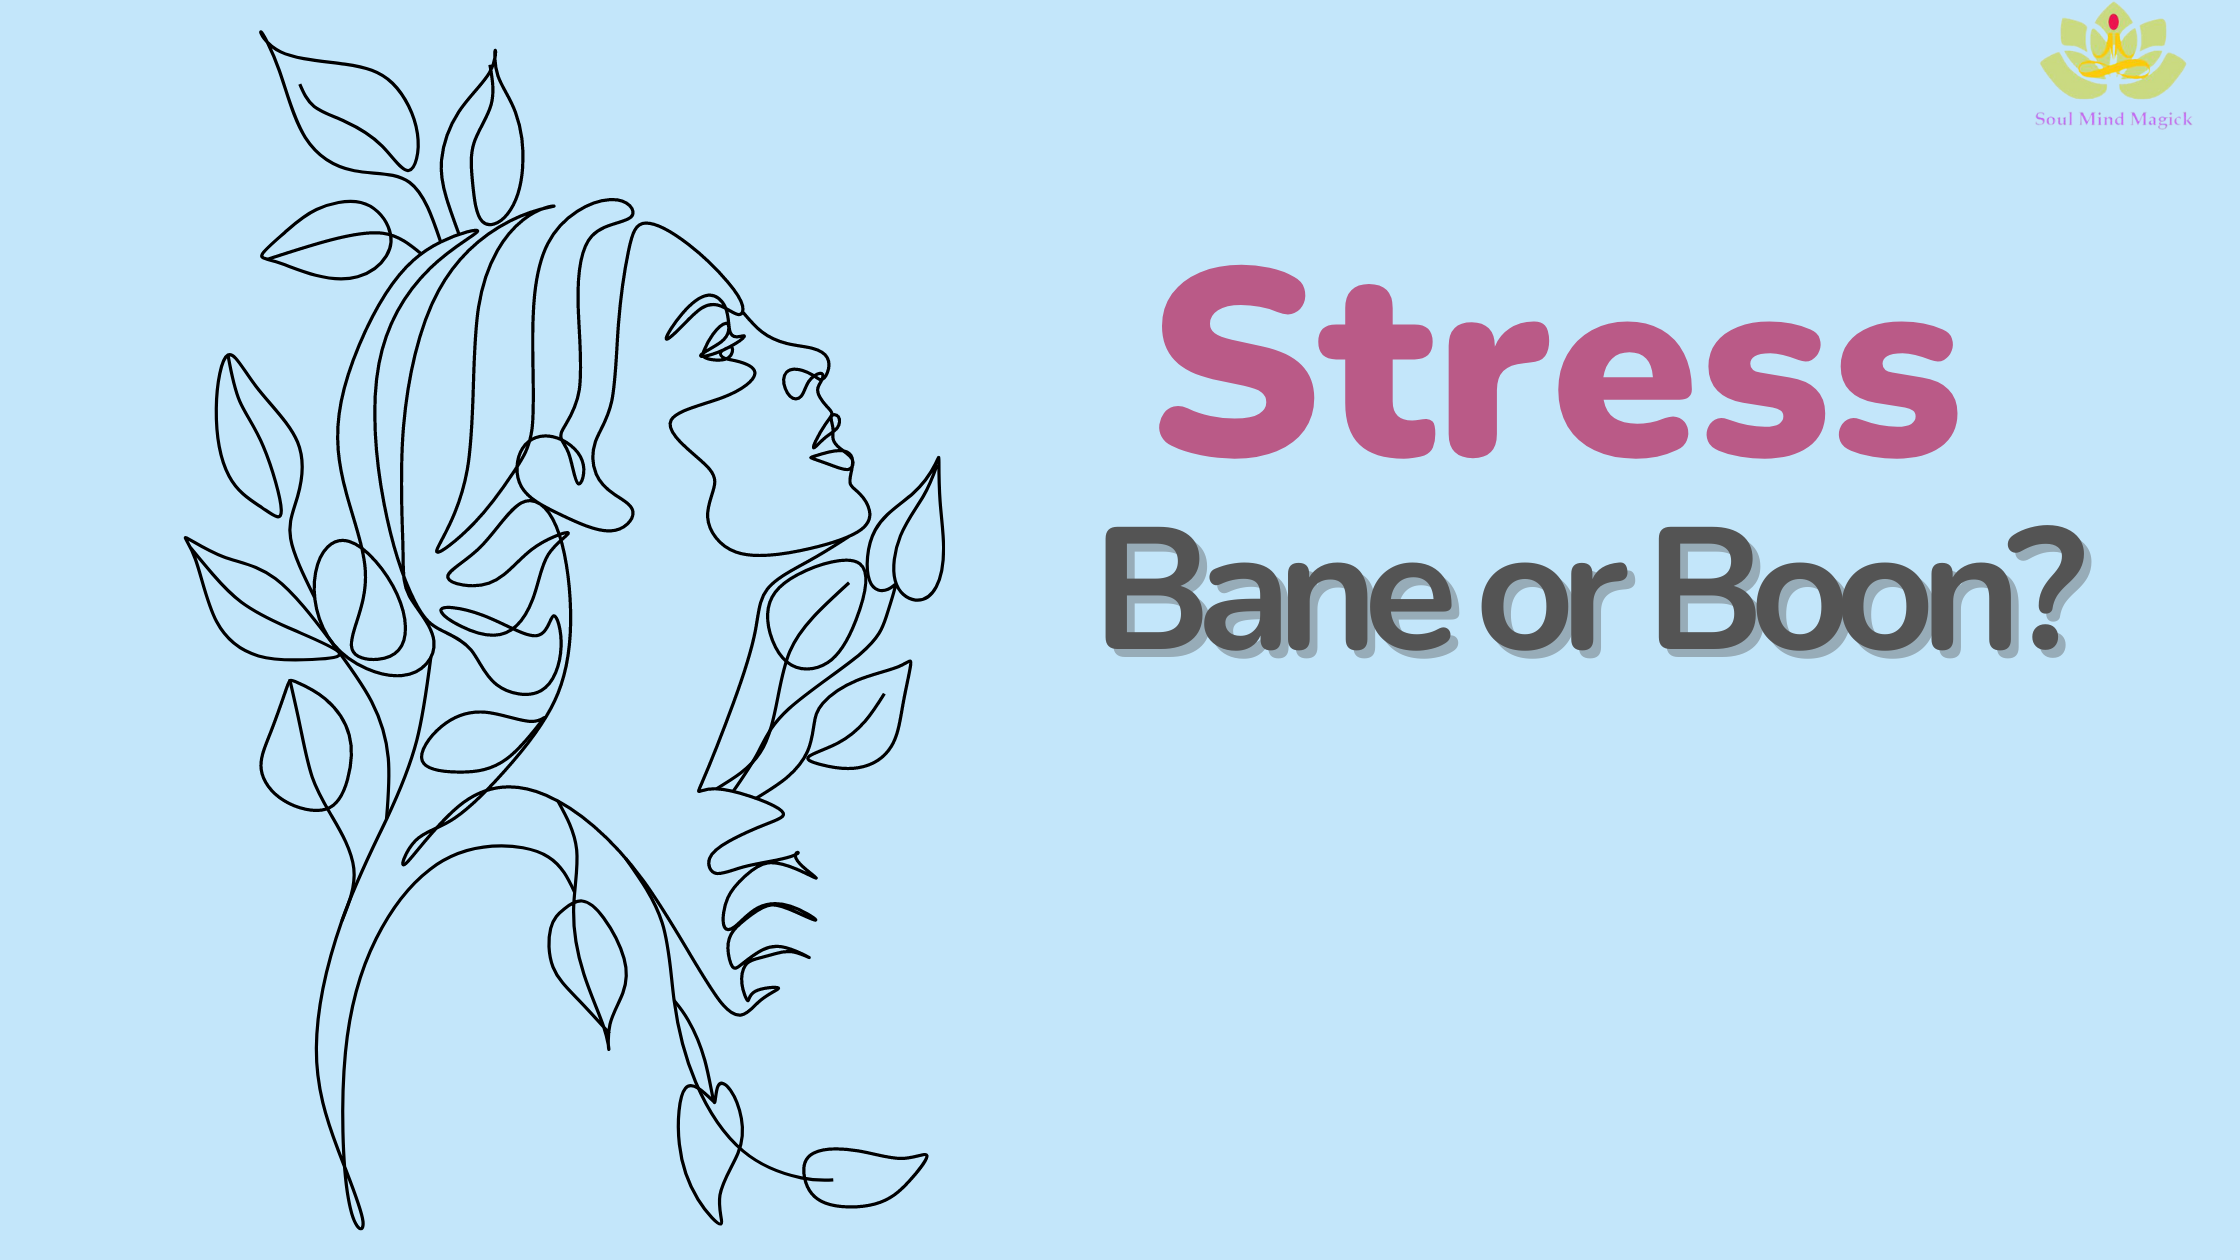 STRESS BANE OR BOON